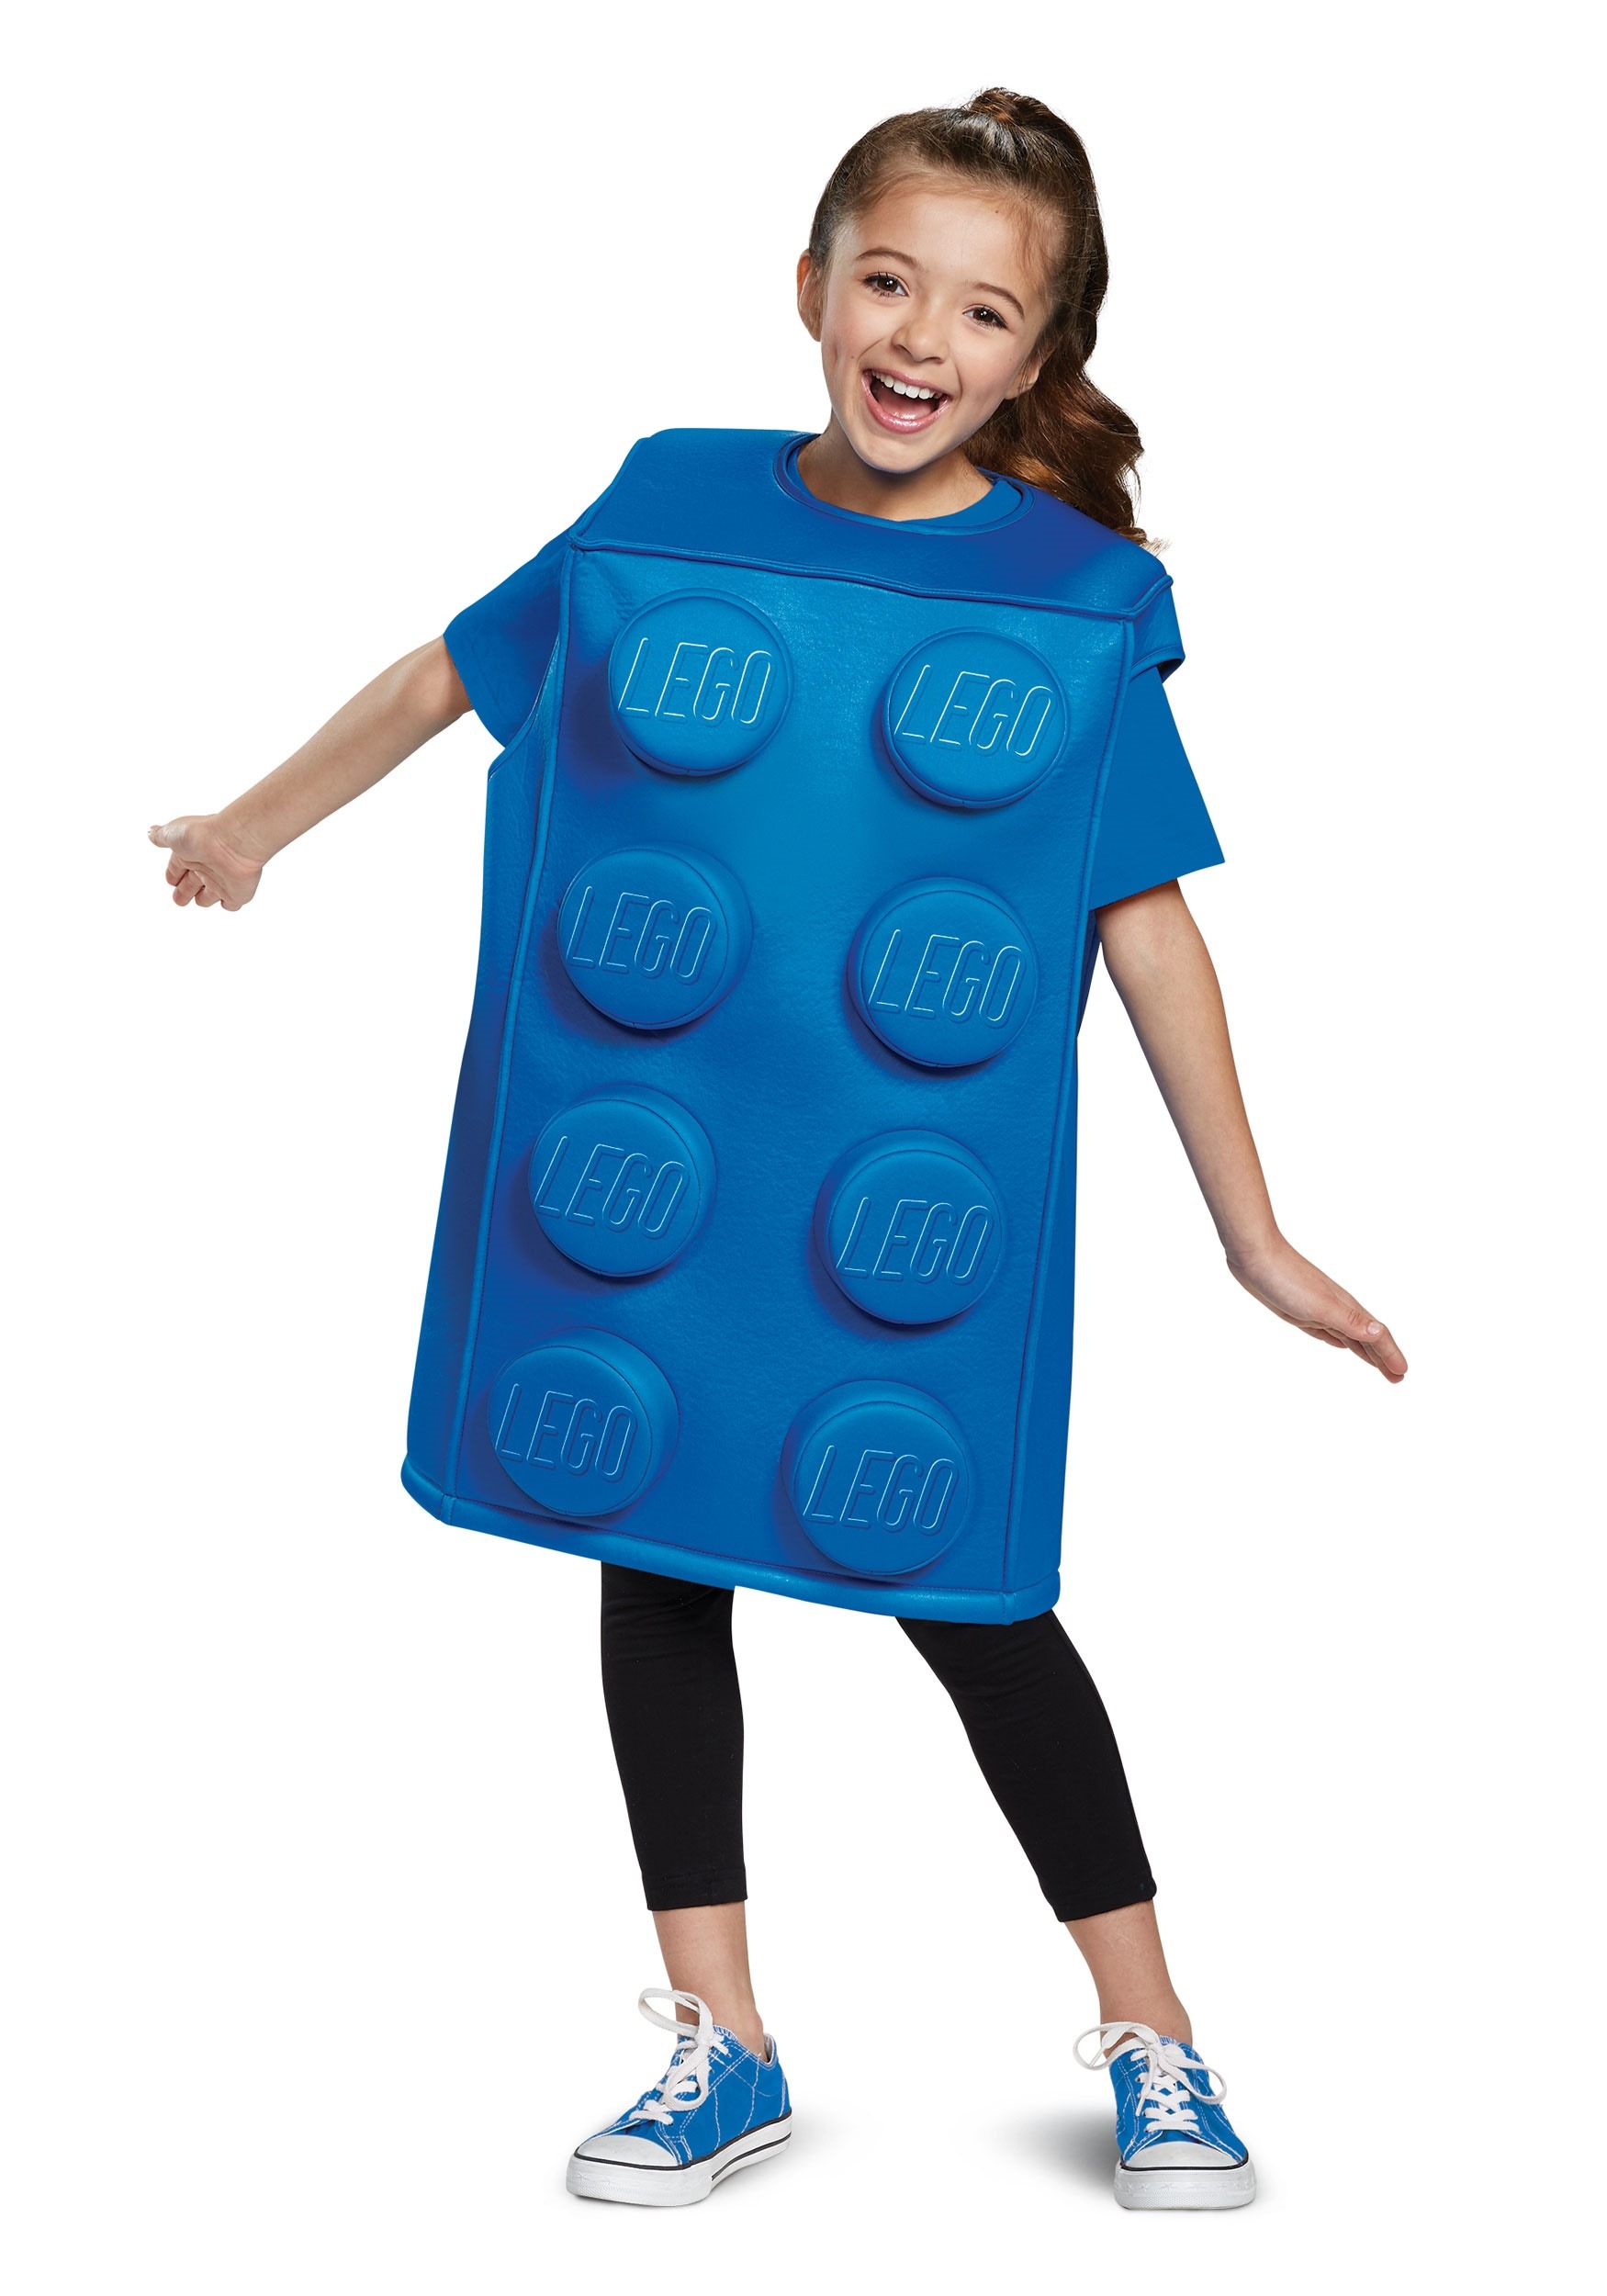 Child Lego Blue Brick Costume